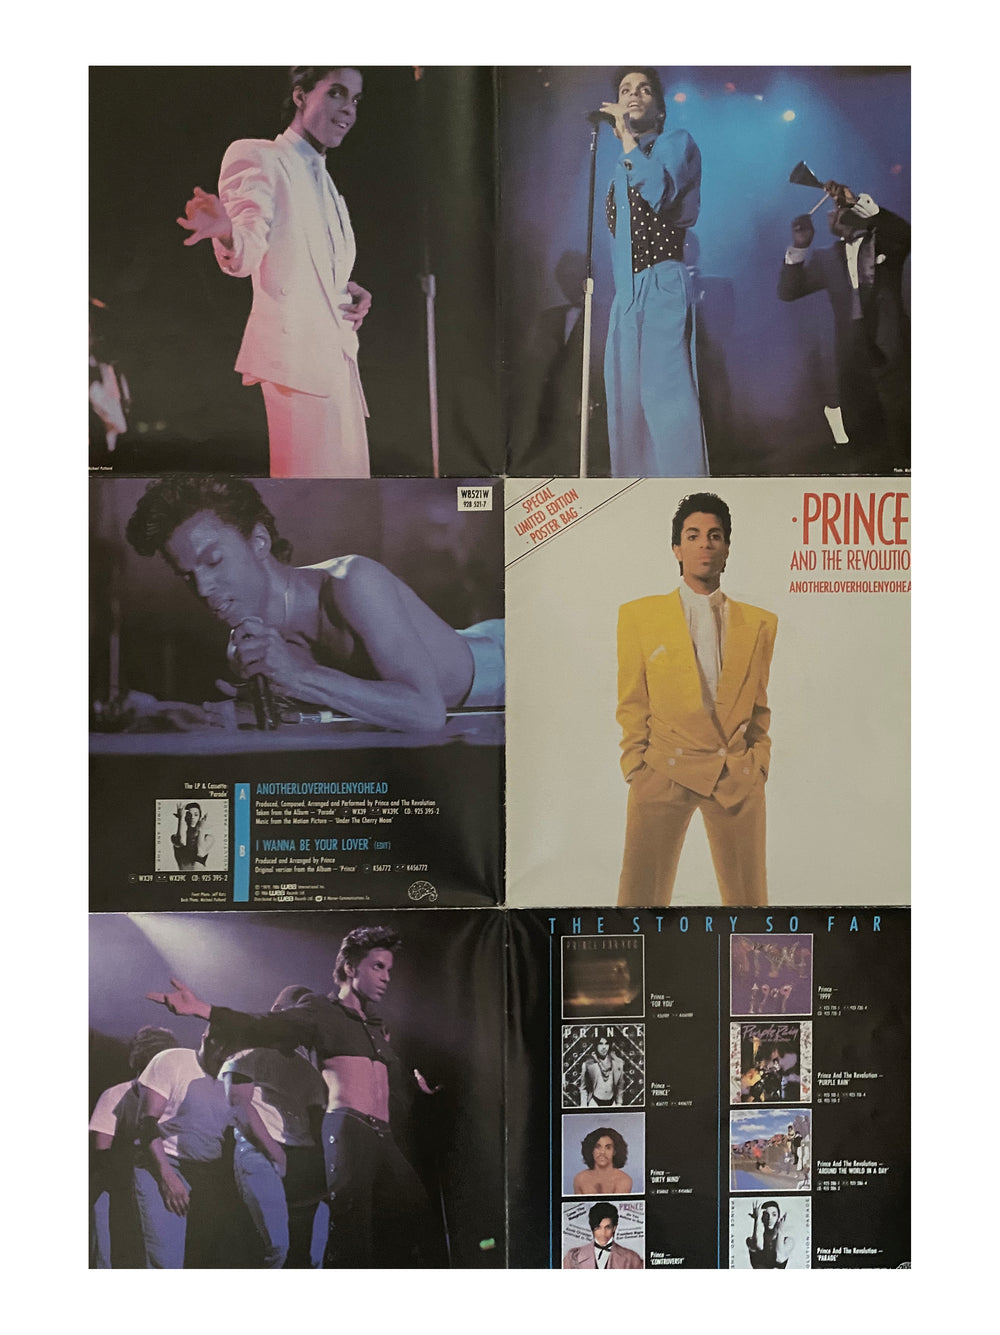 Prince ANOTHERLOVERHOLEINYOHEAD 7 Inch Vinyl Single 1986 Poster Bag SMS